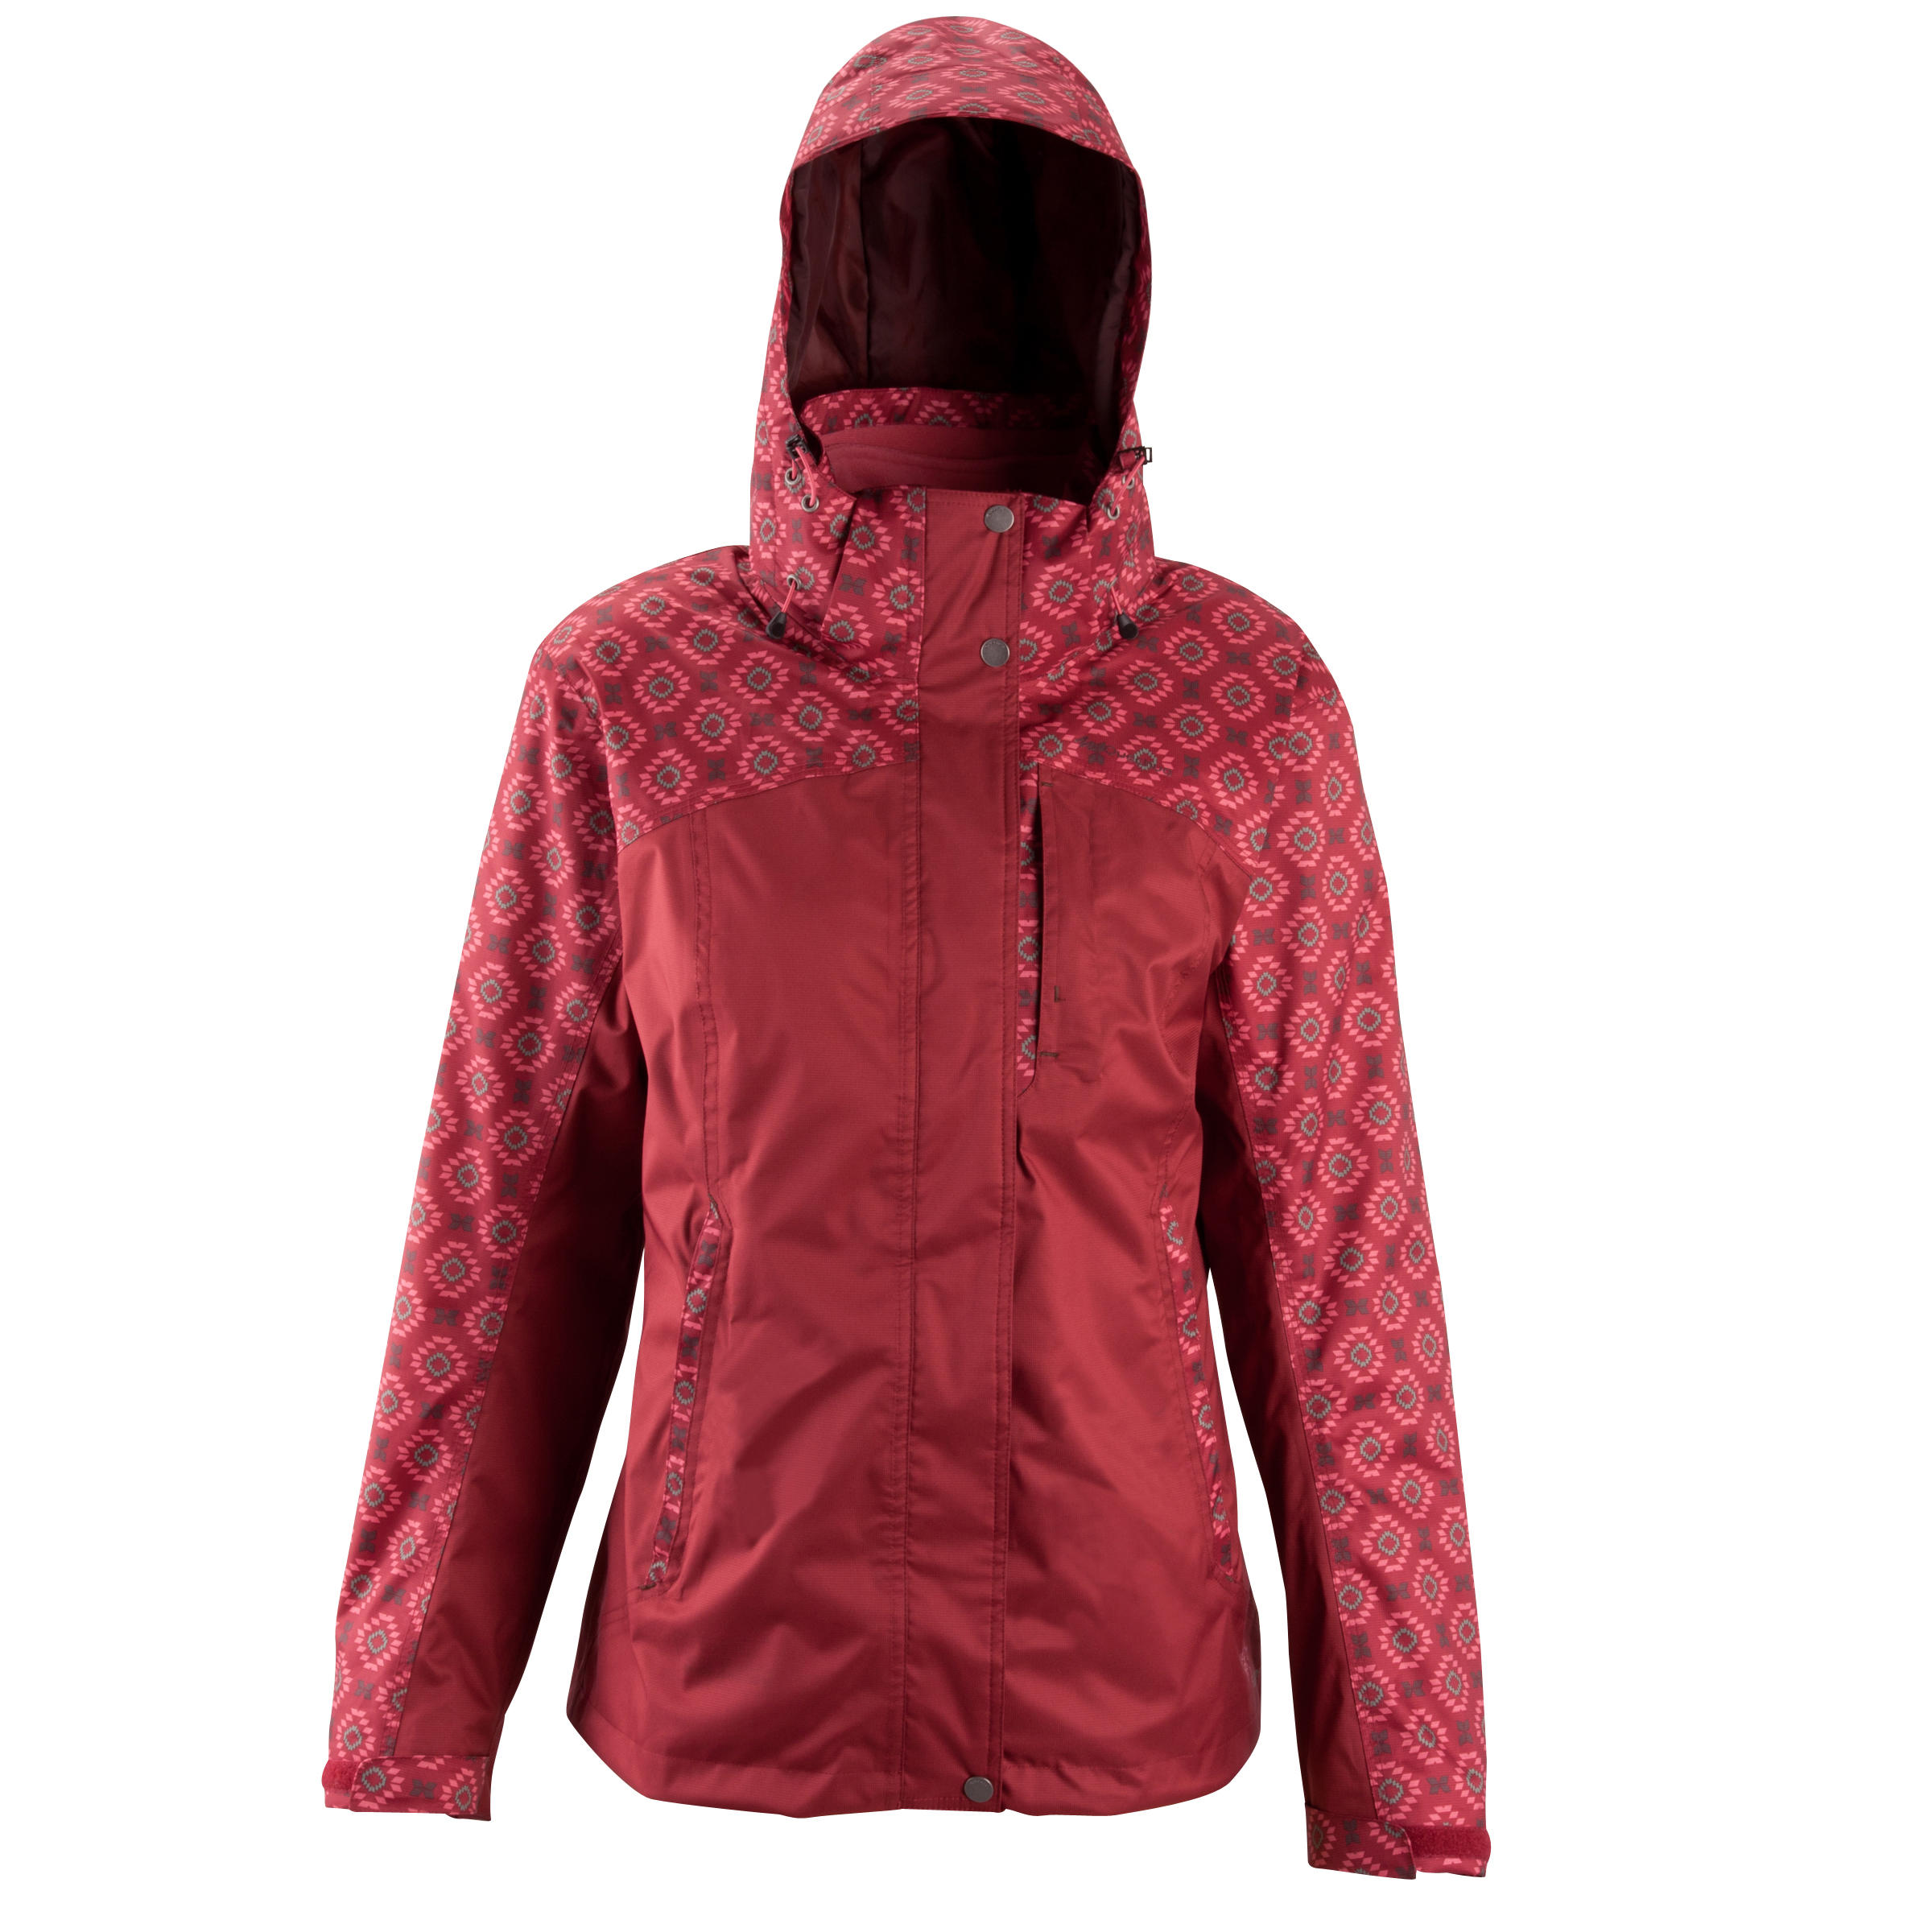 QUECHUA Arpenaz 300 Rain 3-in-1 Women's Hiking Jacket - Burgundy Red